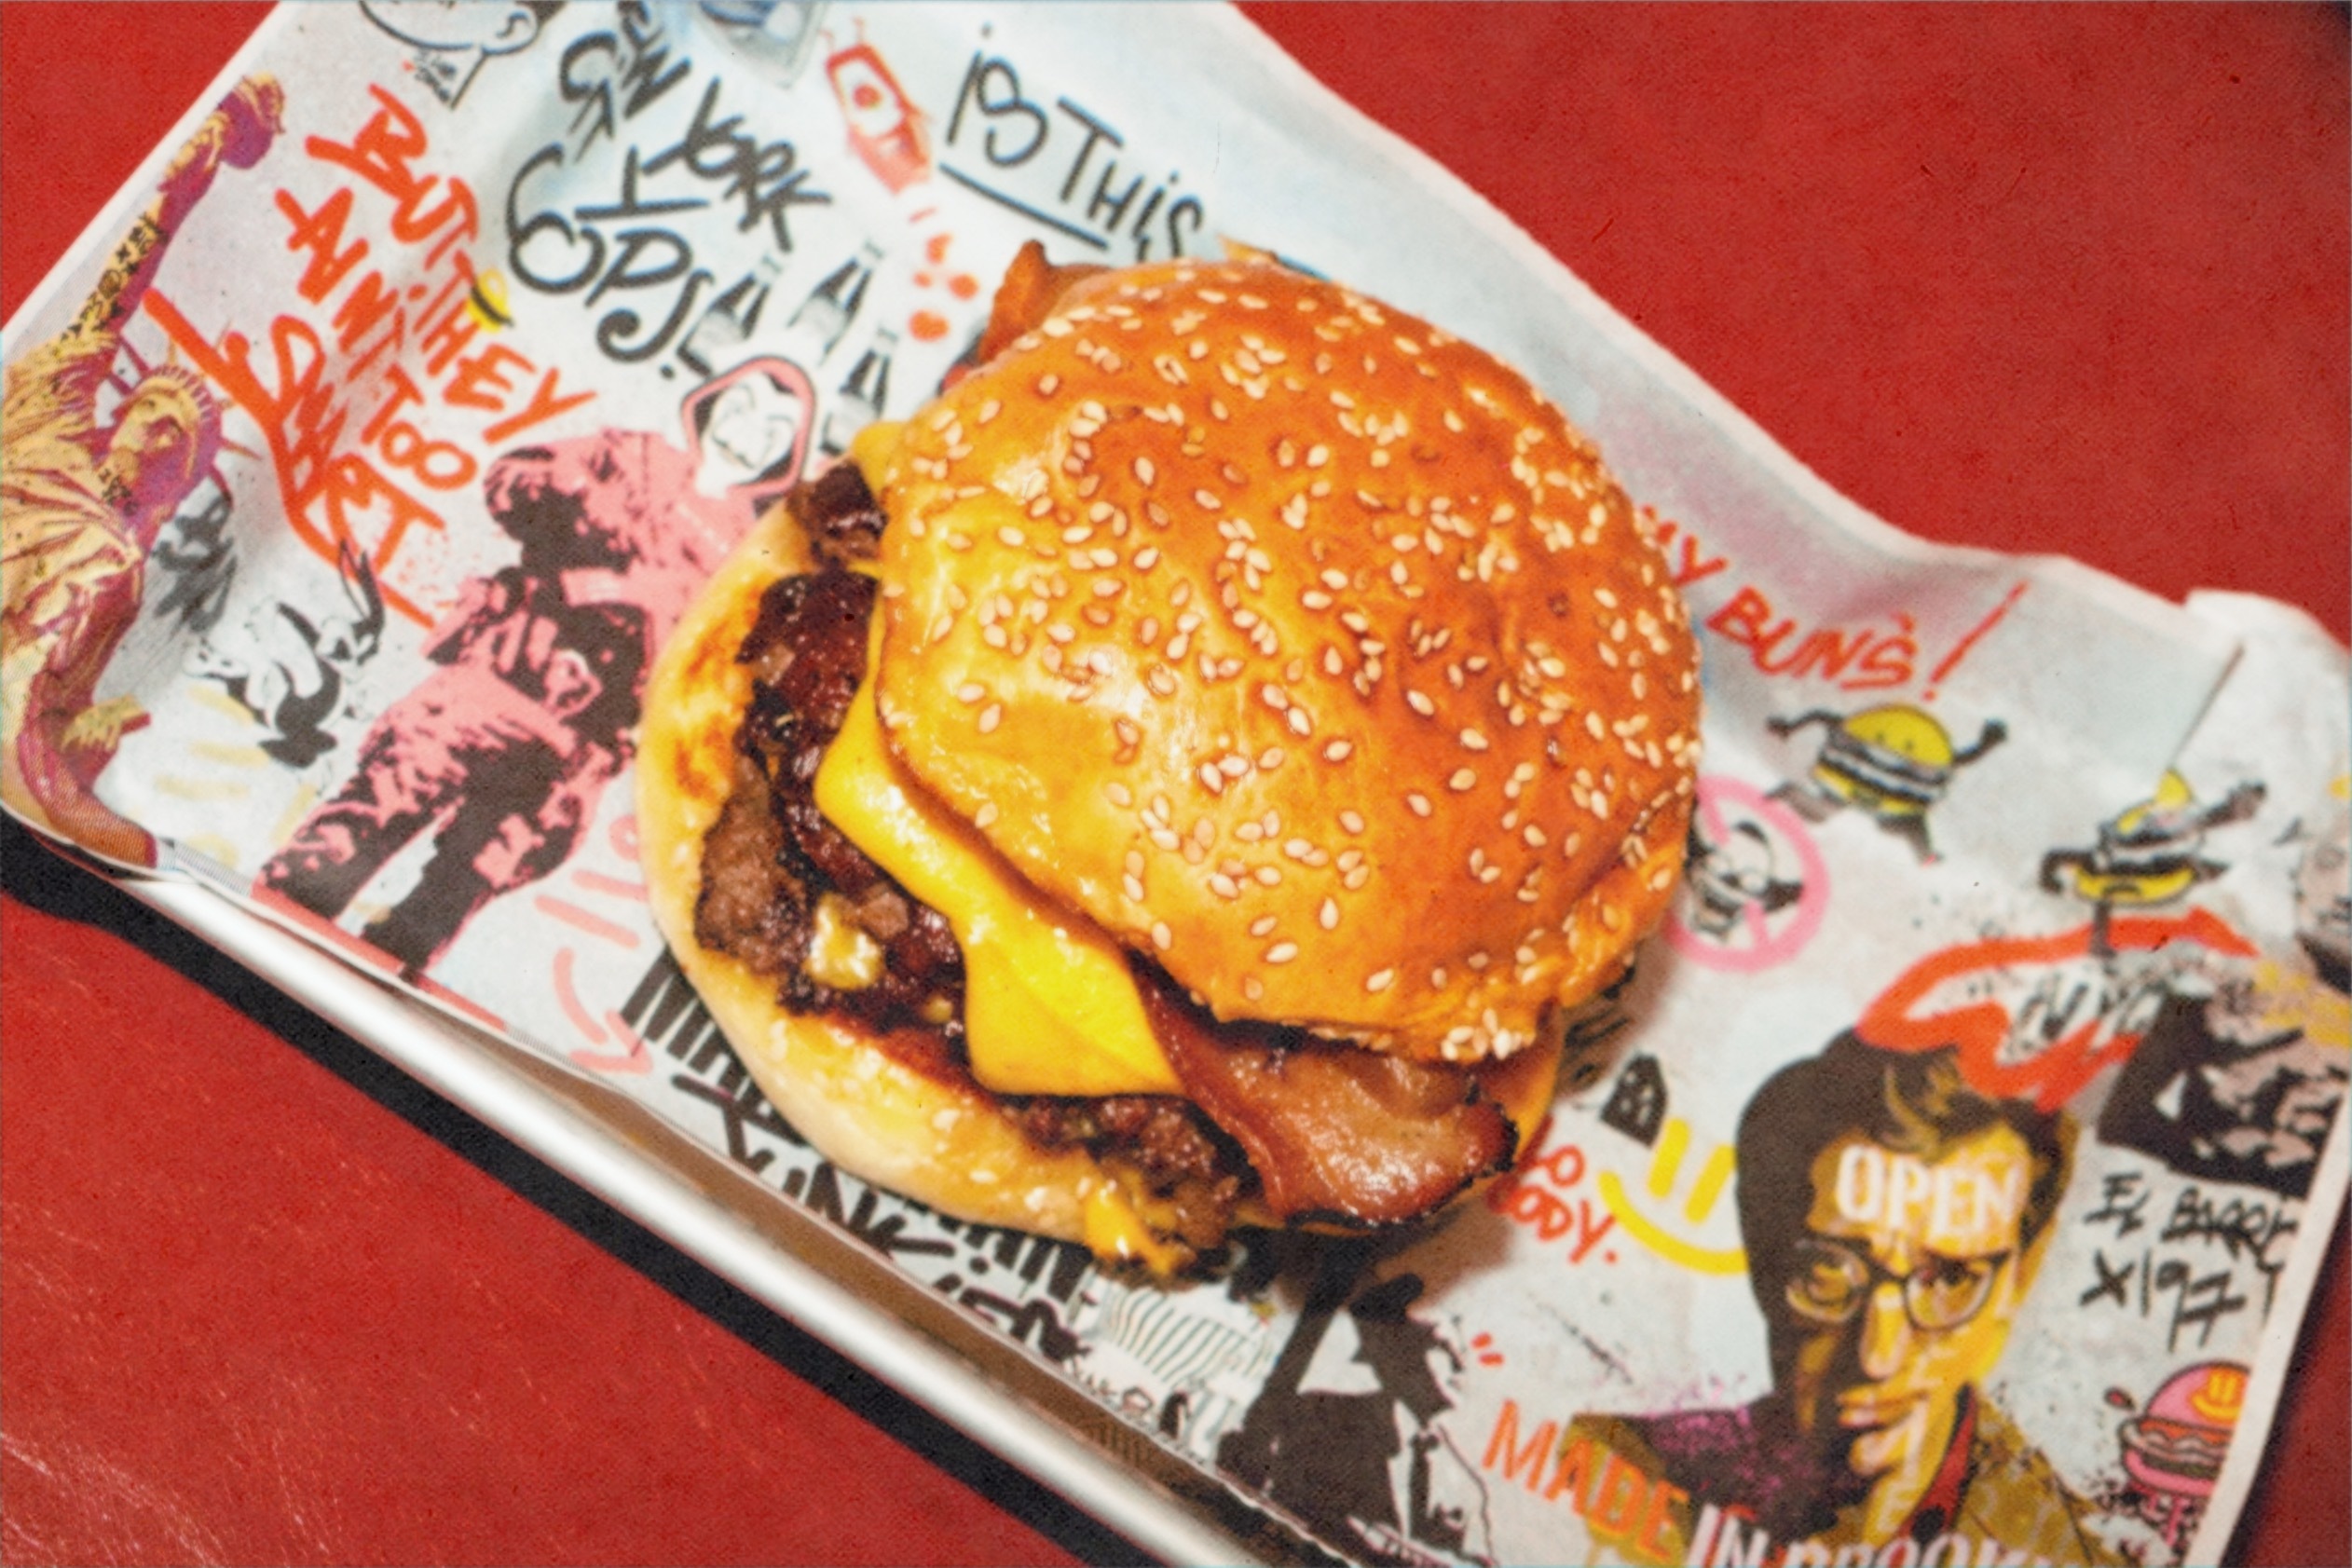 The menu offers four 'smash' hamburgers.